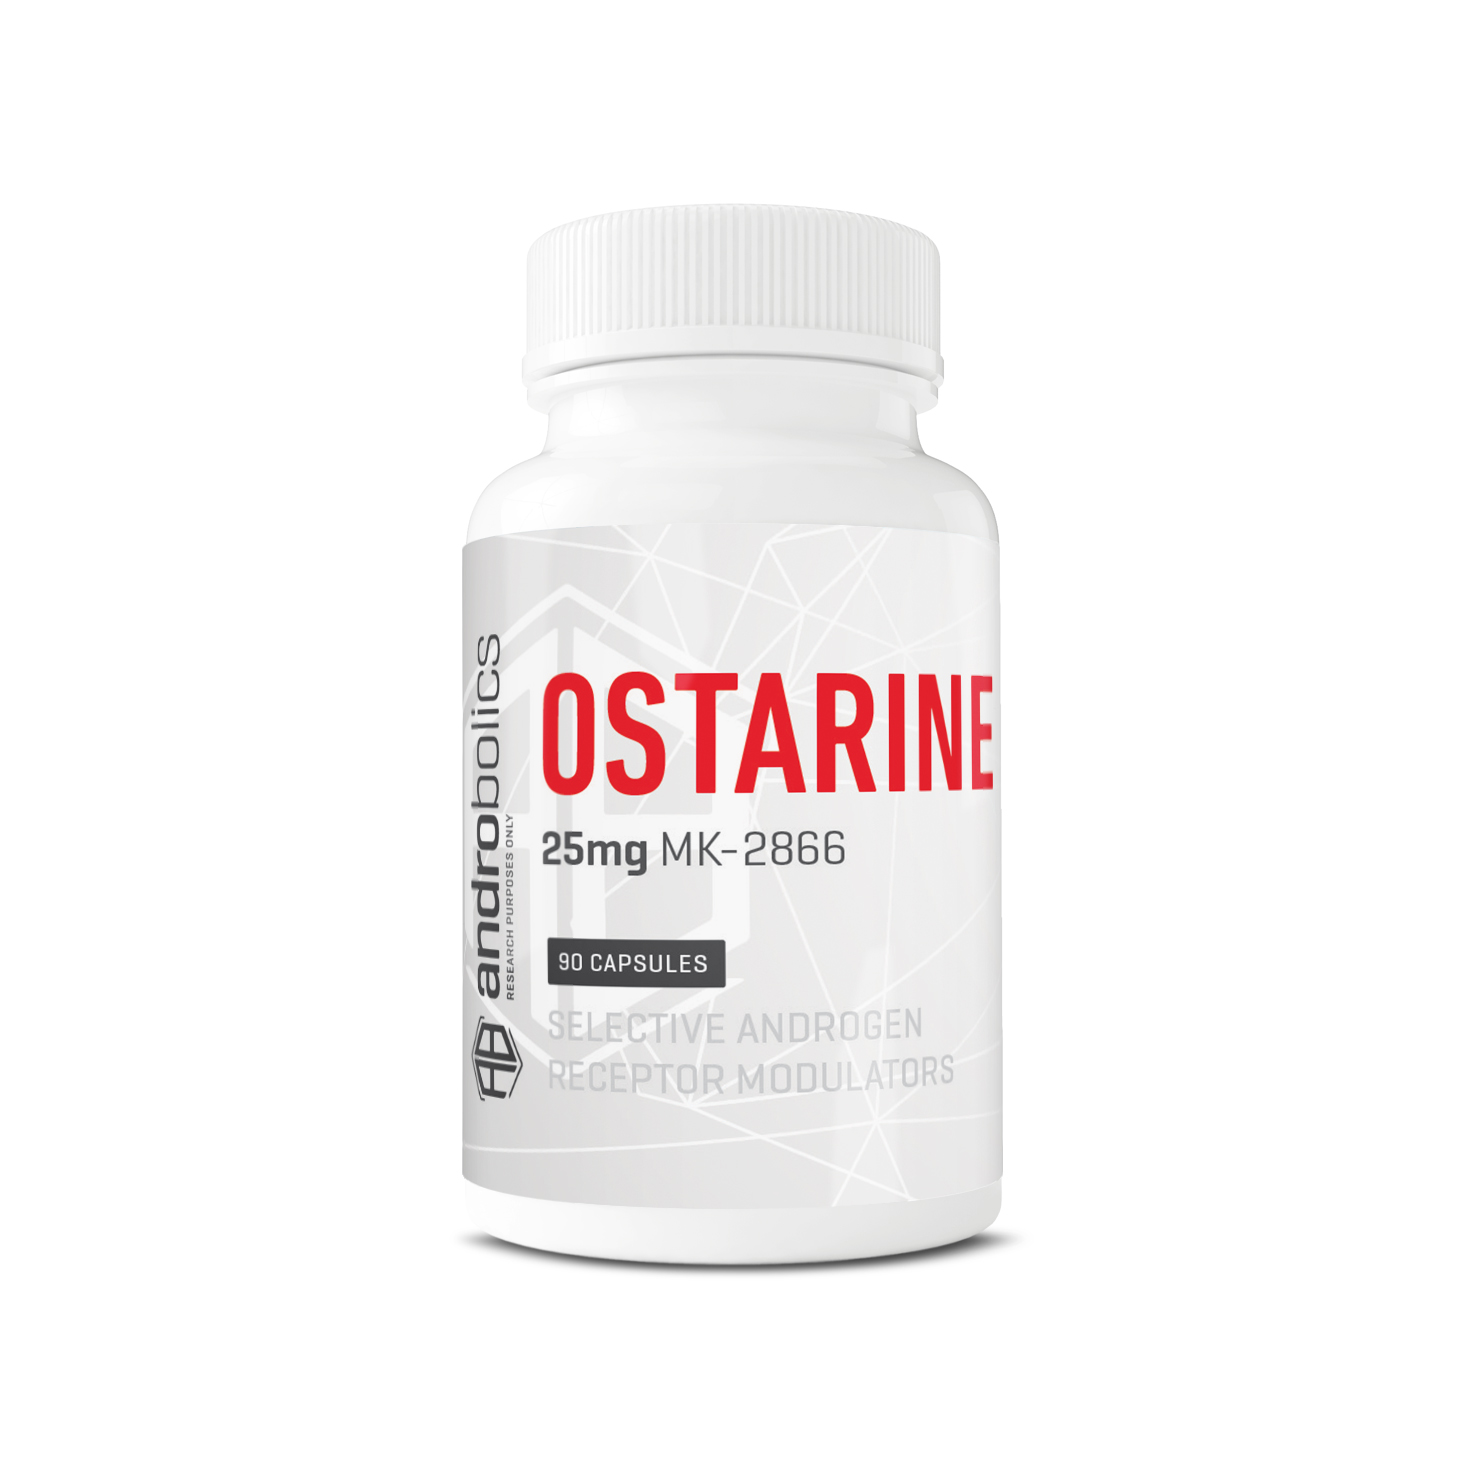 Ostarine Canada - Bottle of Ostarine MK-2866 with 90 capsules of 25mg